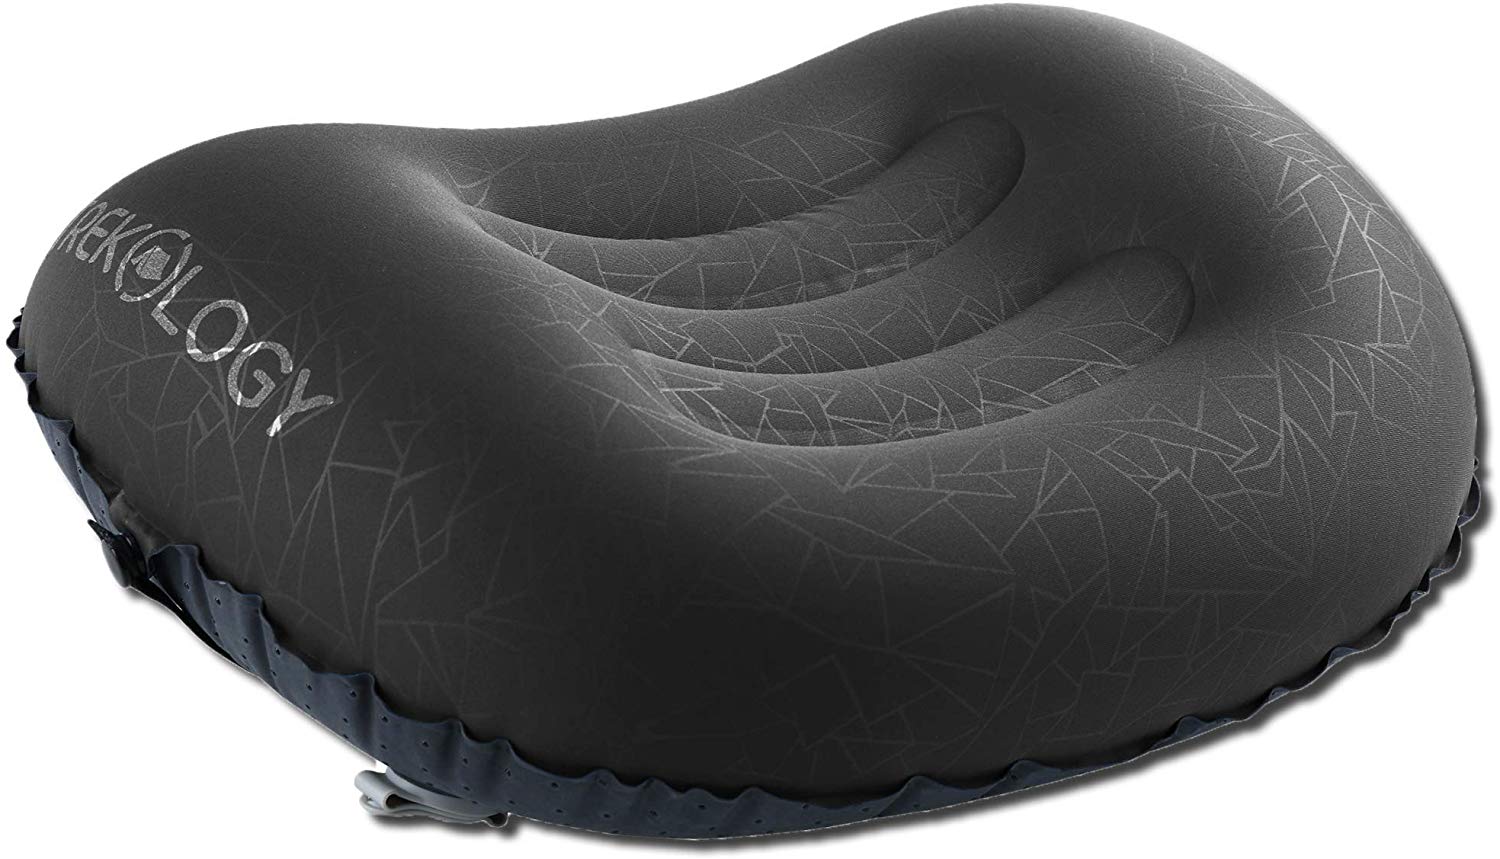 Trekology Ultralight Inflatable Camping Travel Pillow